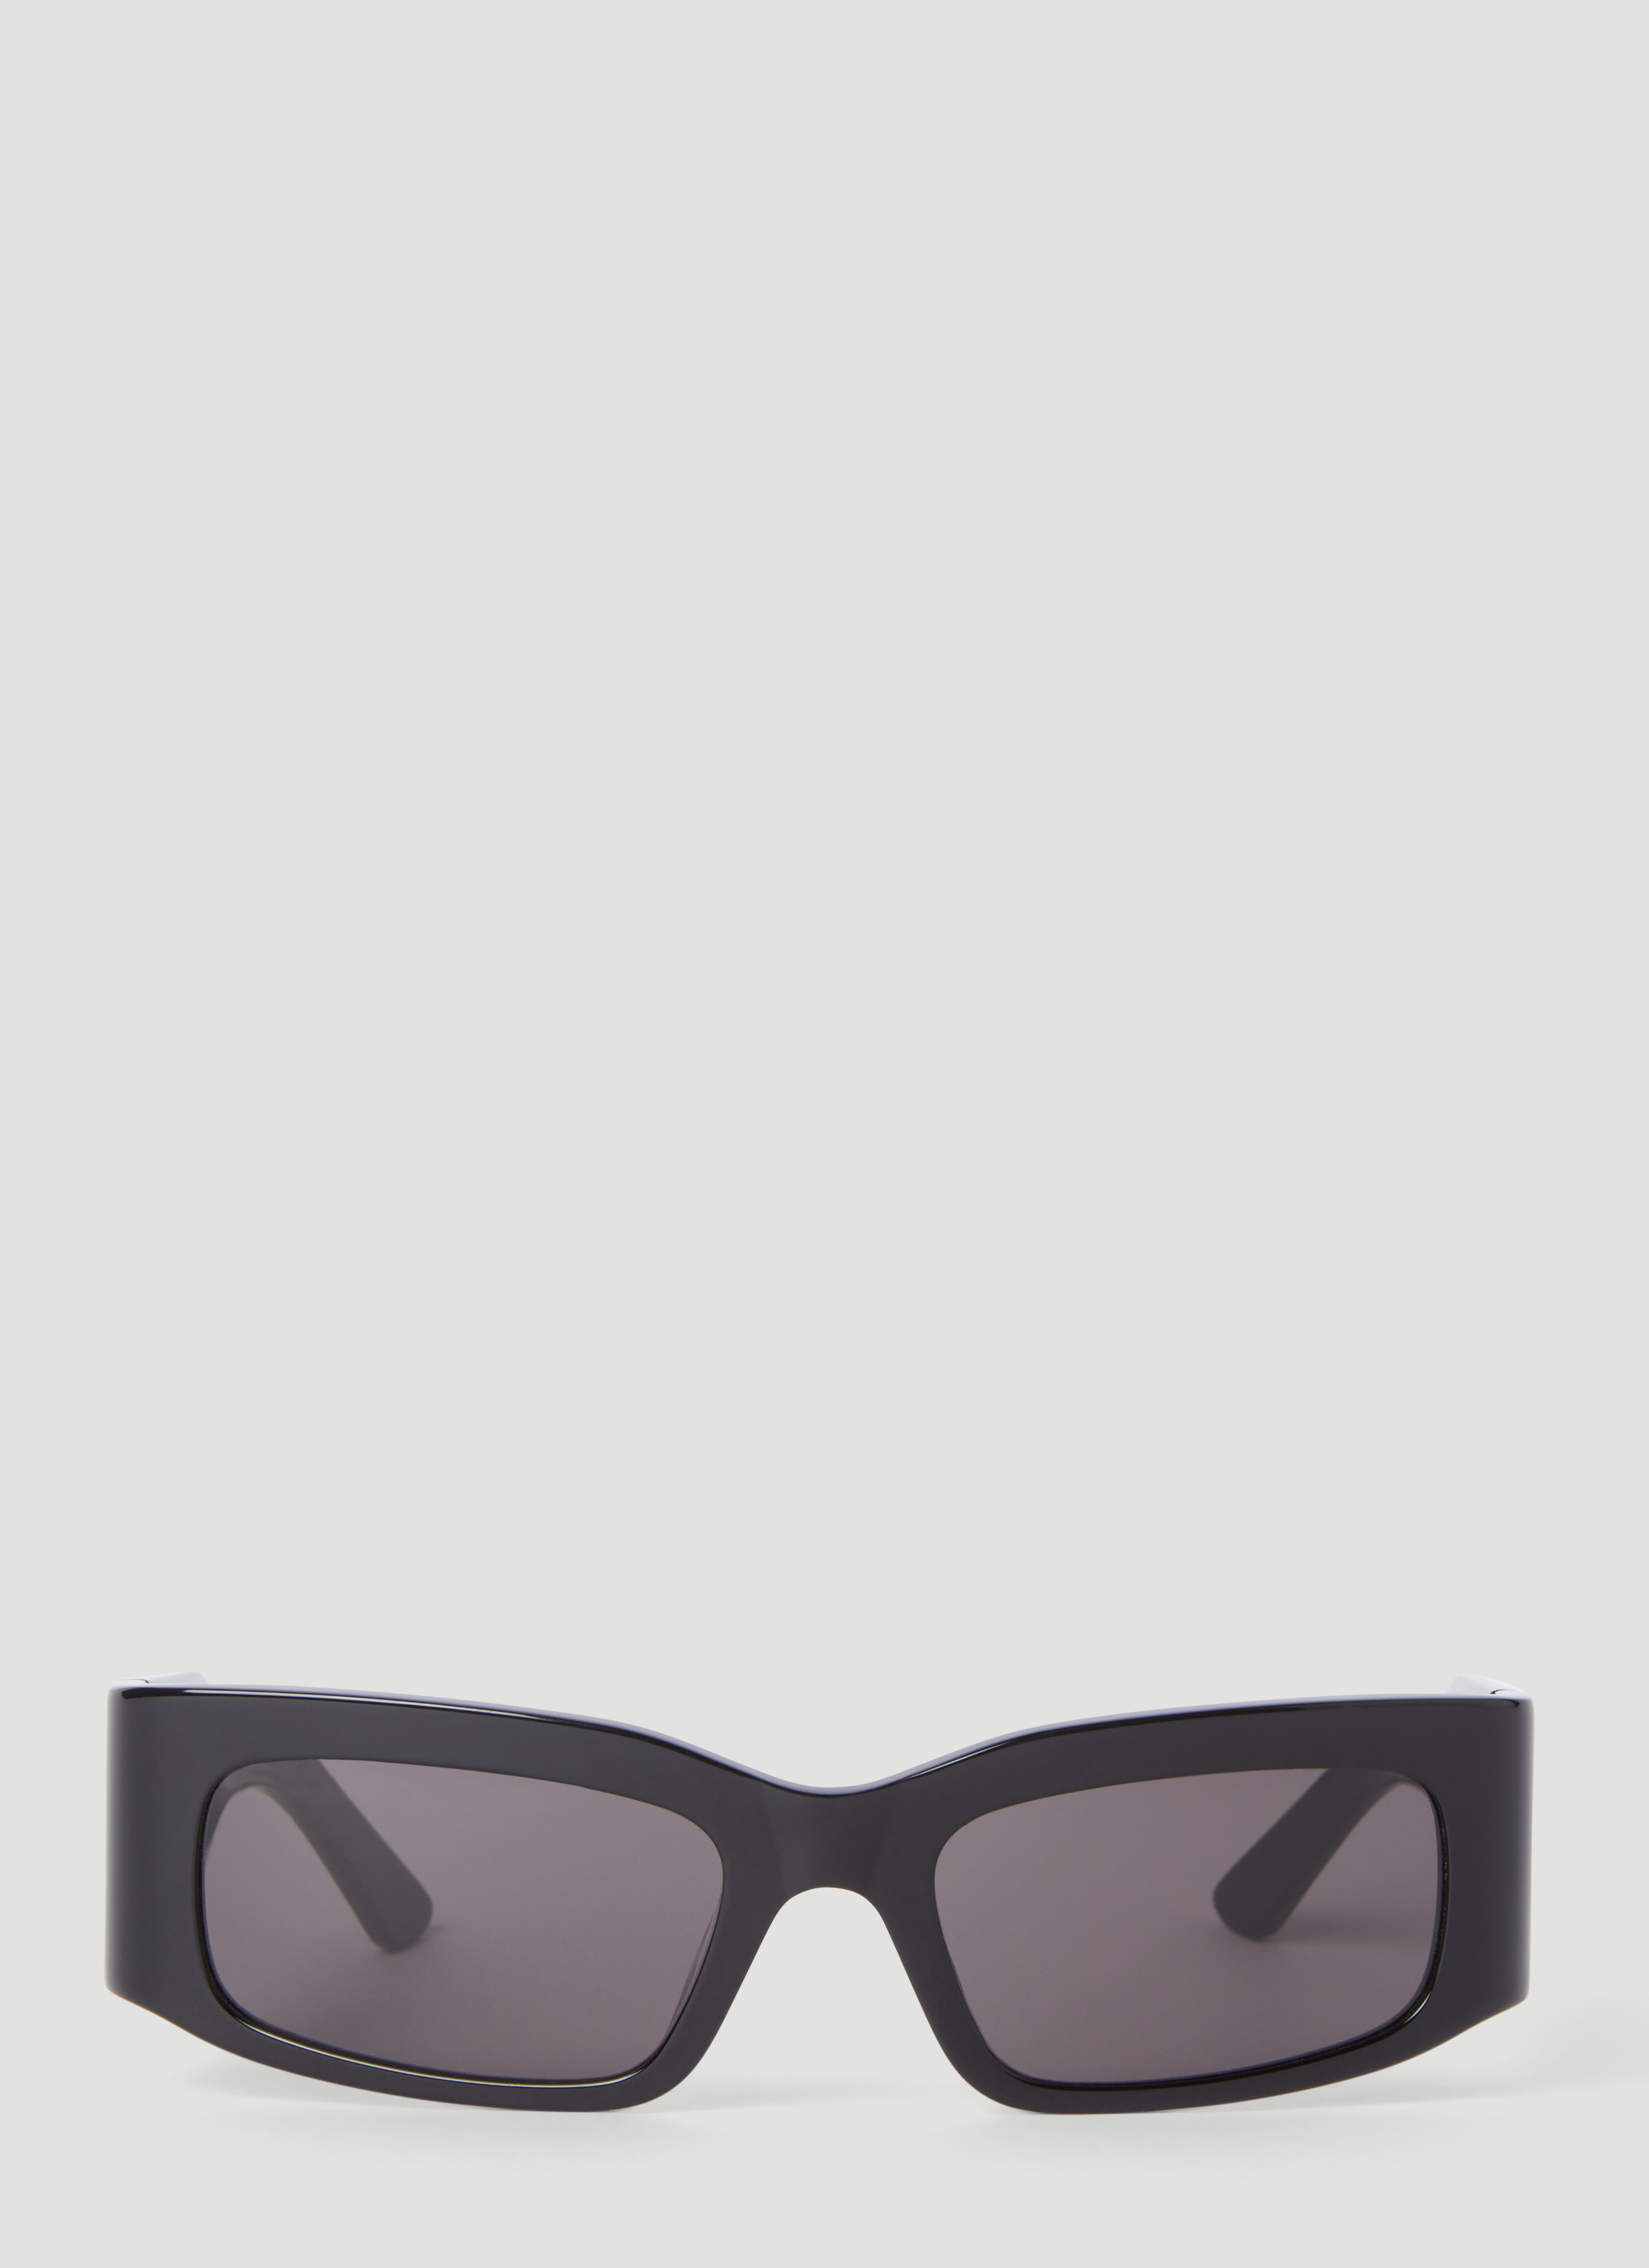 Gucci Paper Rectangle Sunglasses Black gus0156002